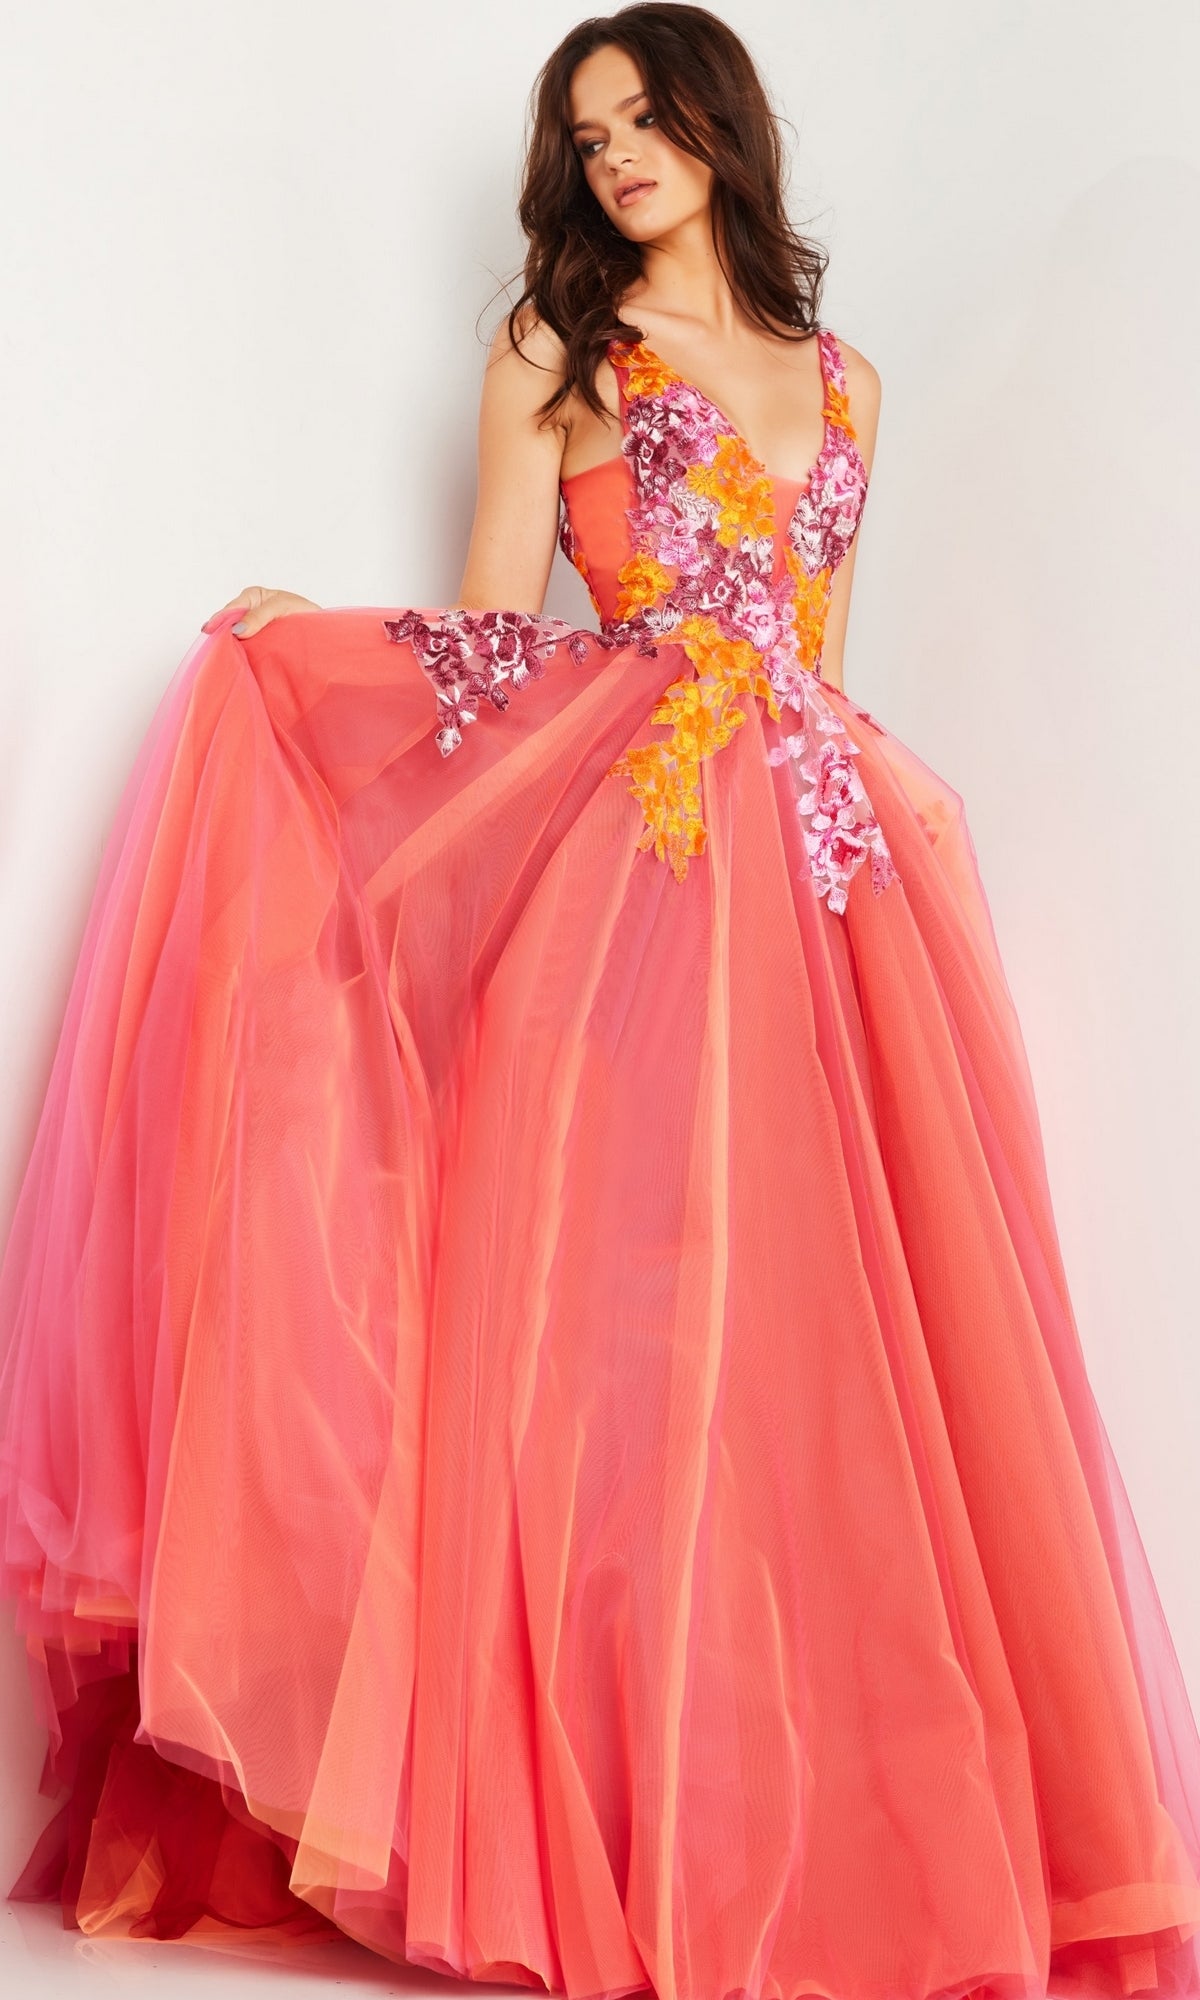 Long Prom Dress 25800 by Jovani